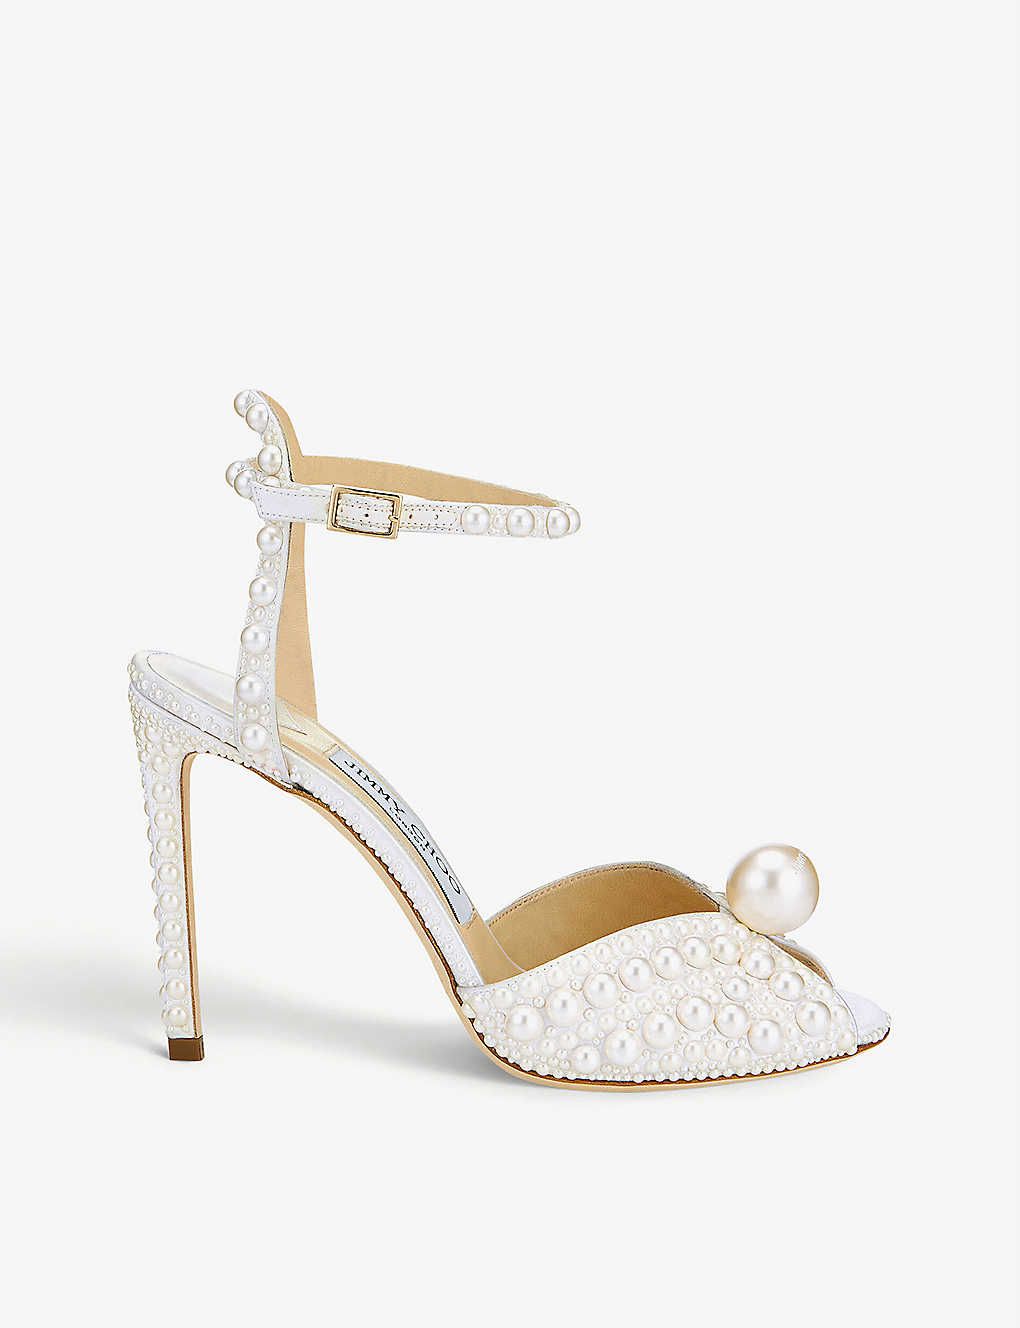 Sacora 100 pearl-embellished satin sandals | Selfridges